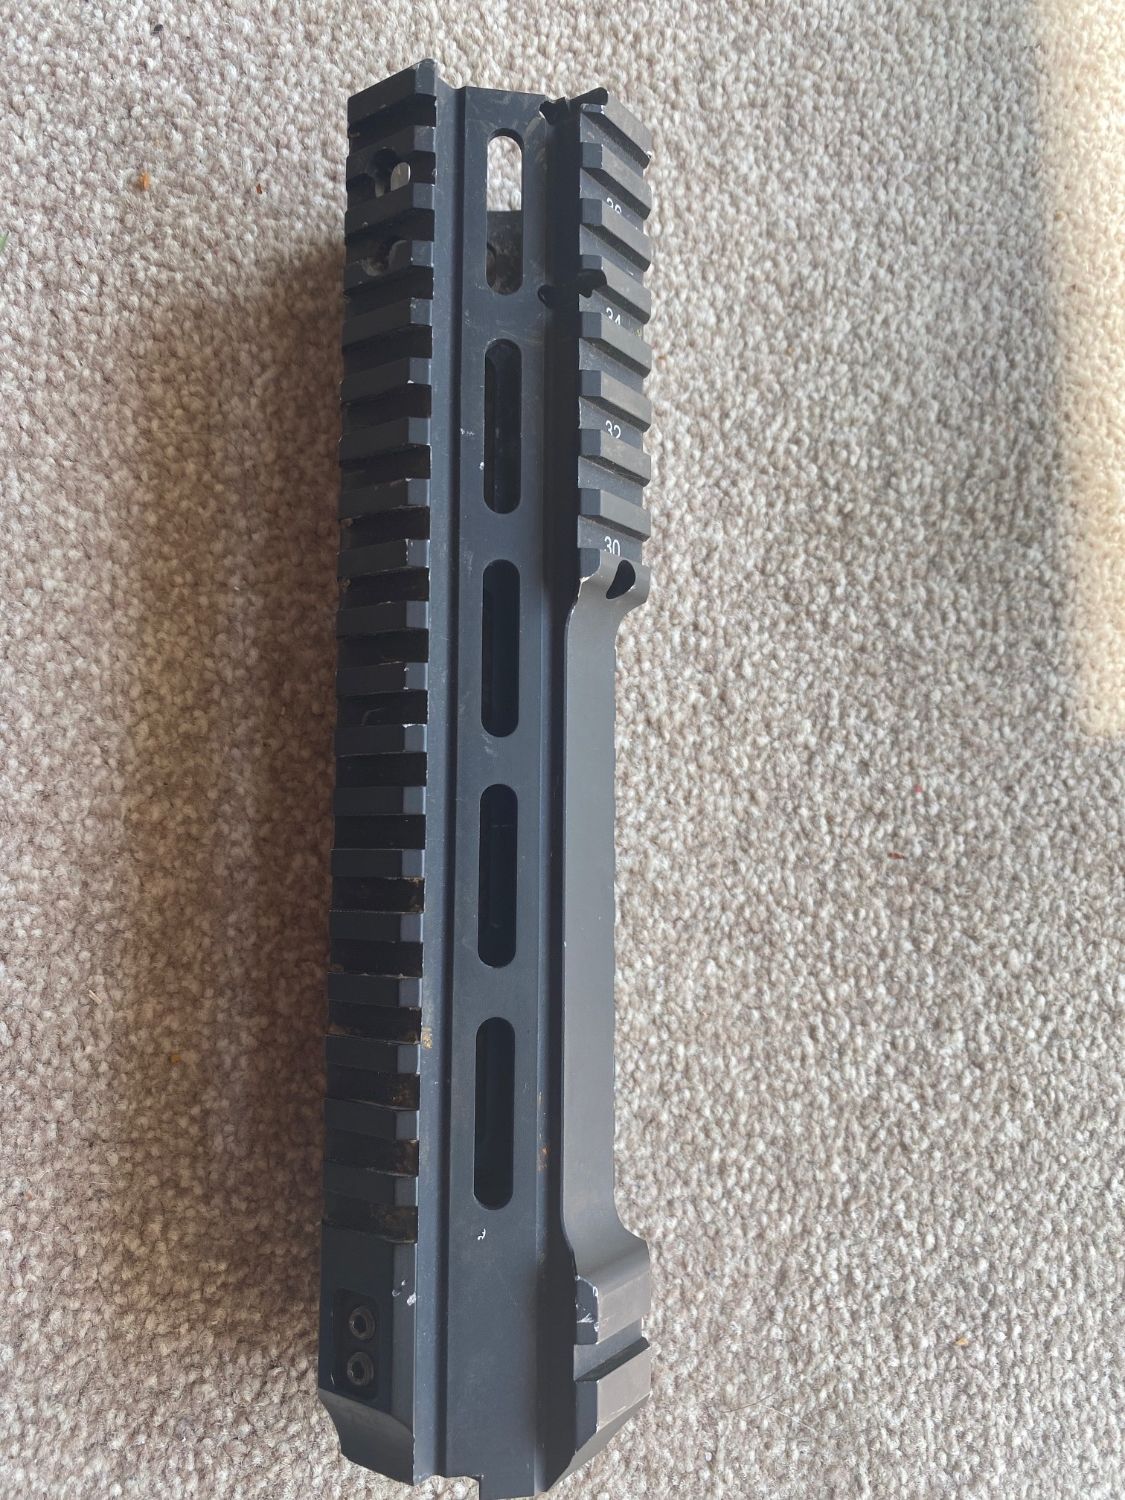 Angry gun l119A2 rail - Parts - Airsoft Forums UK